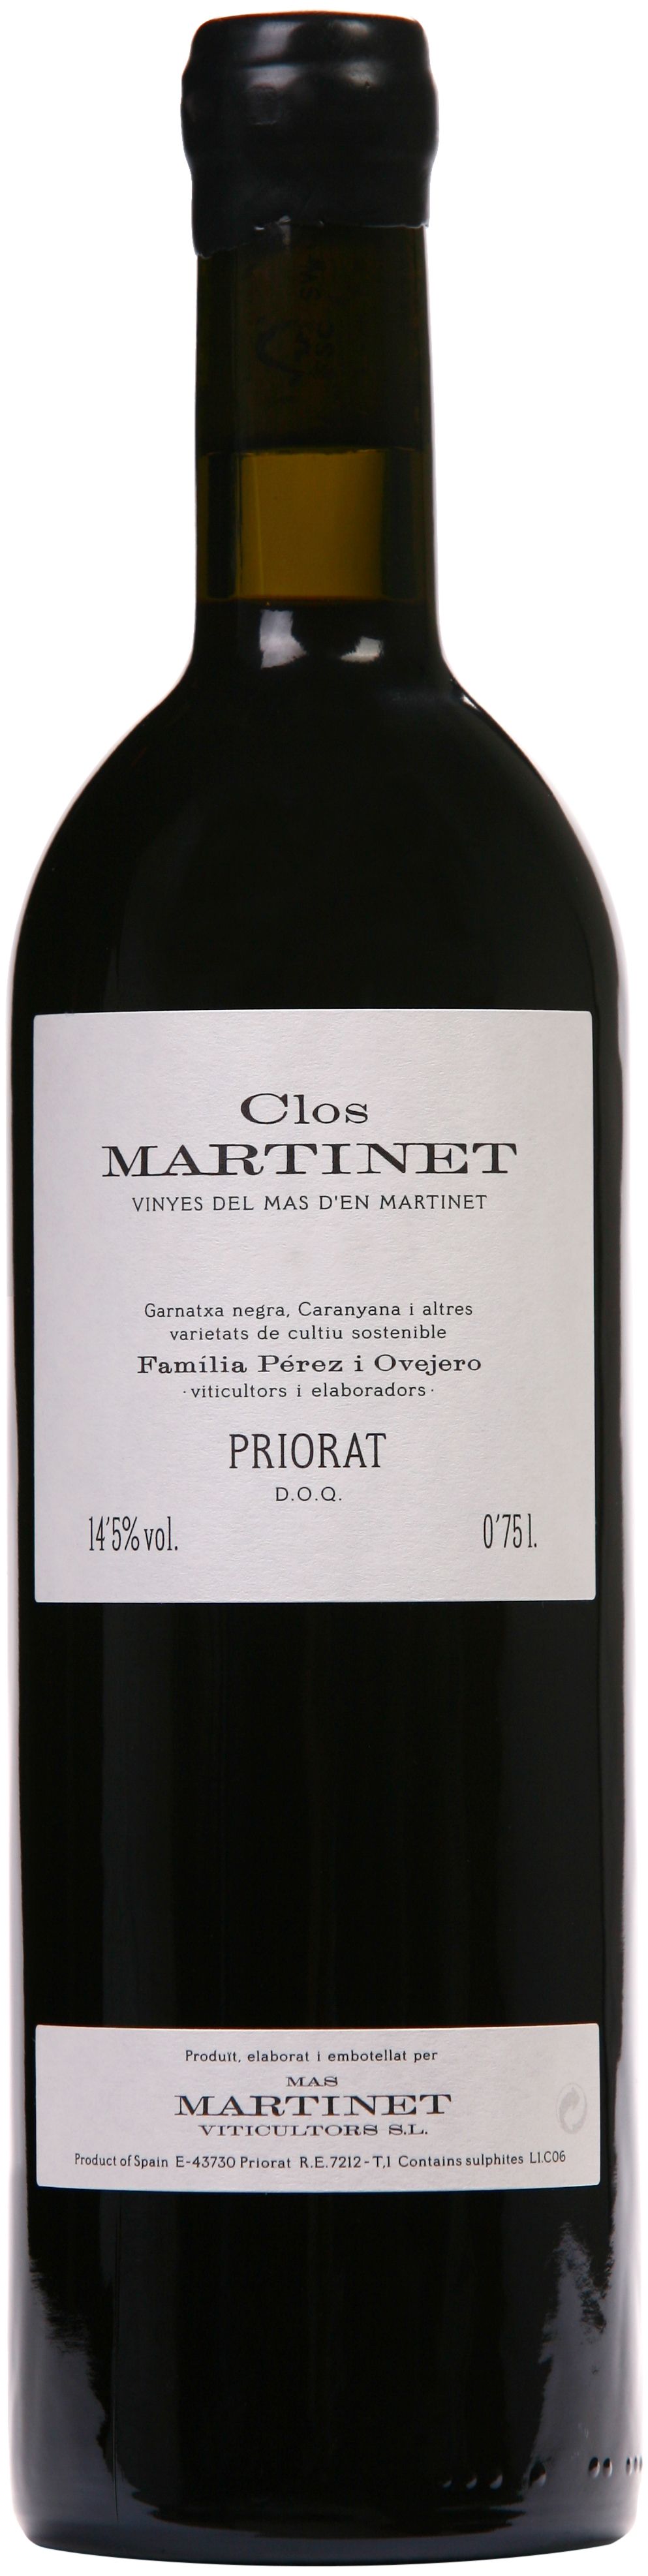 Mas Martinet, Clos Martinet, 2009